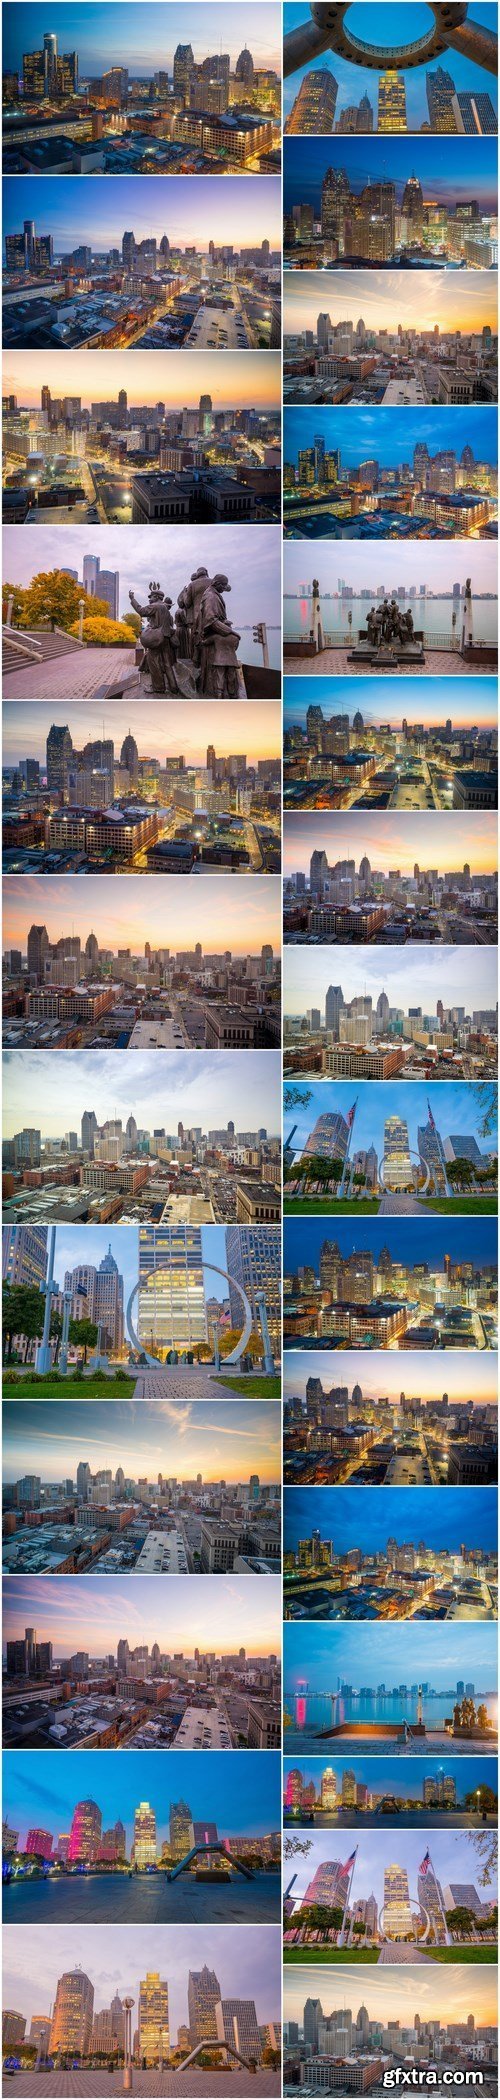 Detroit - Cities of America, - 28xUHQ JPEG Photo Stock